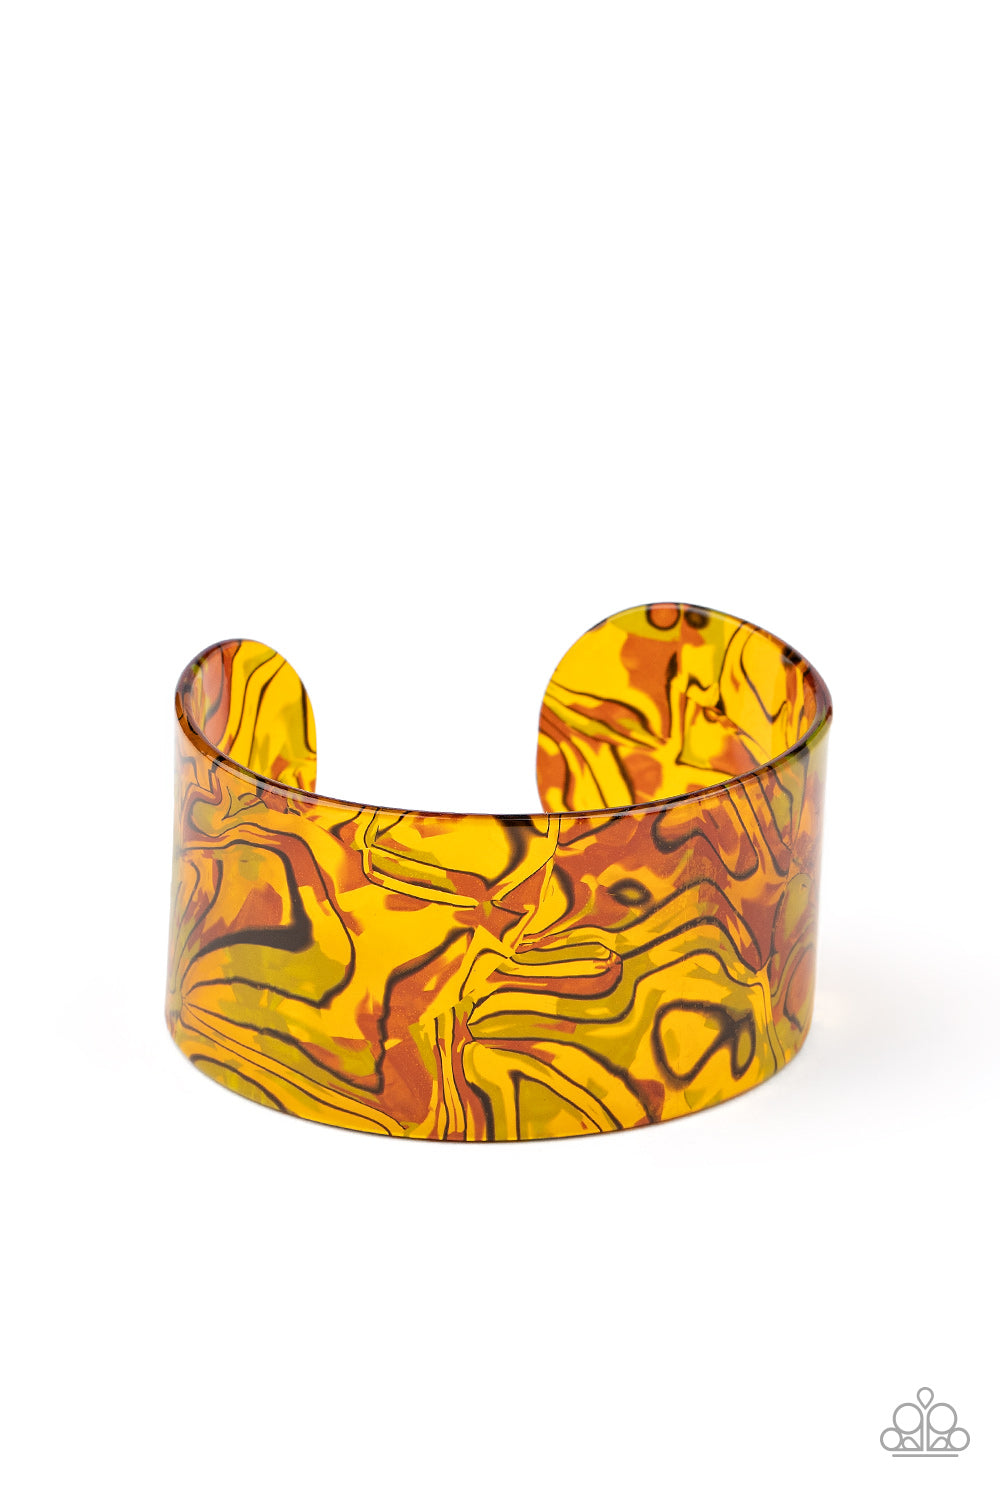 Cosmic Couture Orange Cuff Bracelet - Paparazzi Accessories